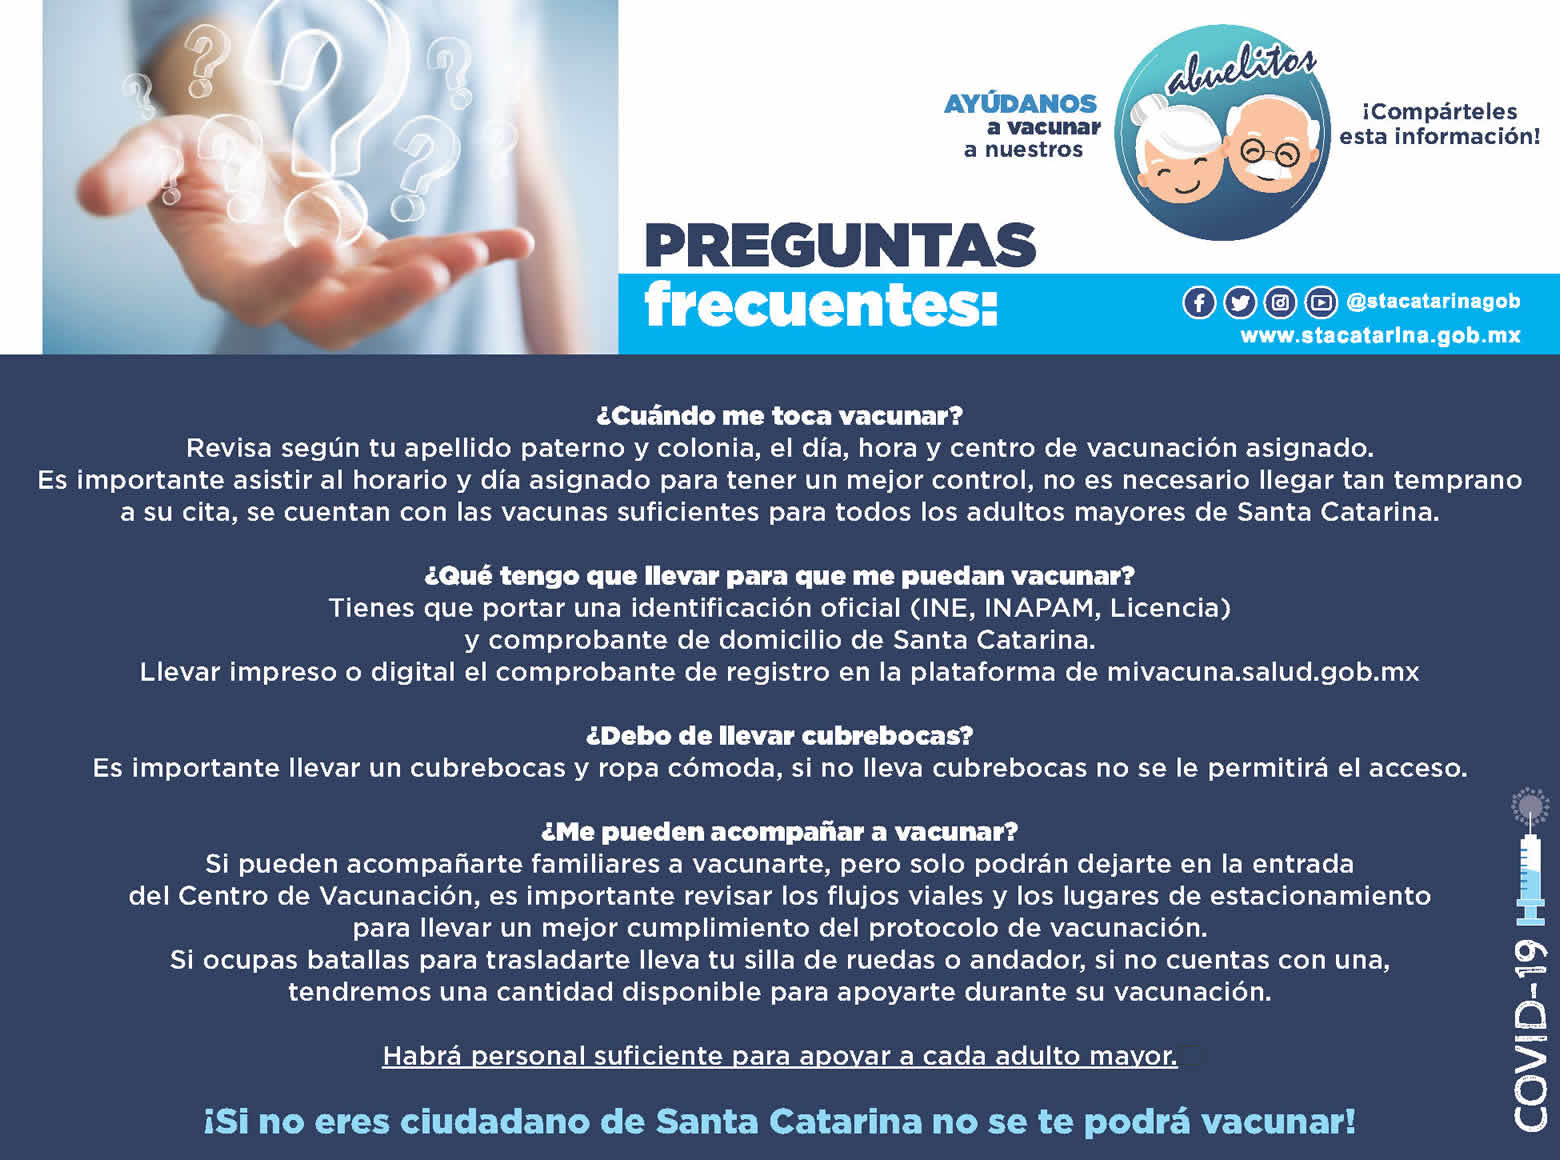 Plan Nacional de Vacunación - Santa Catarina, NL